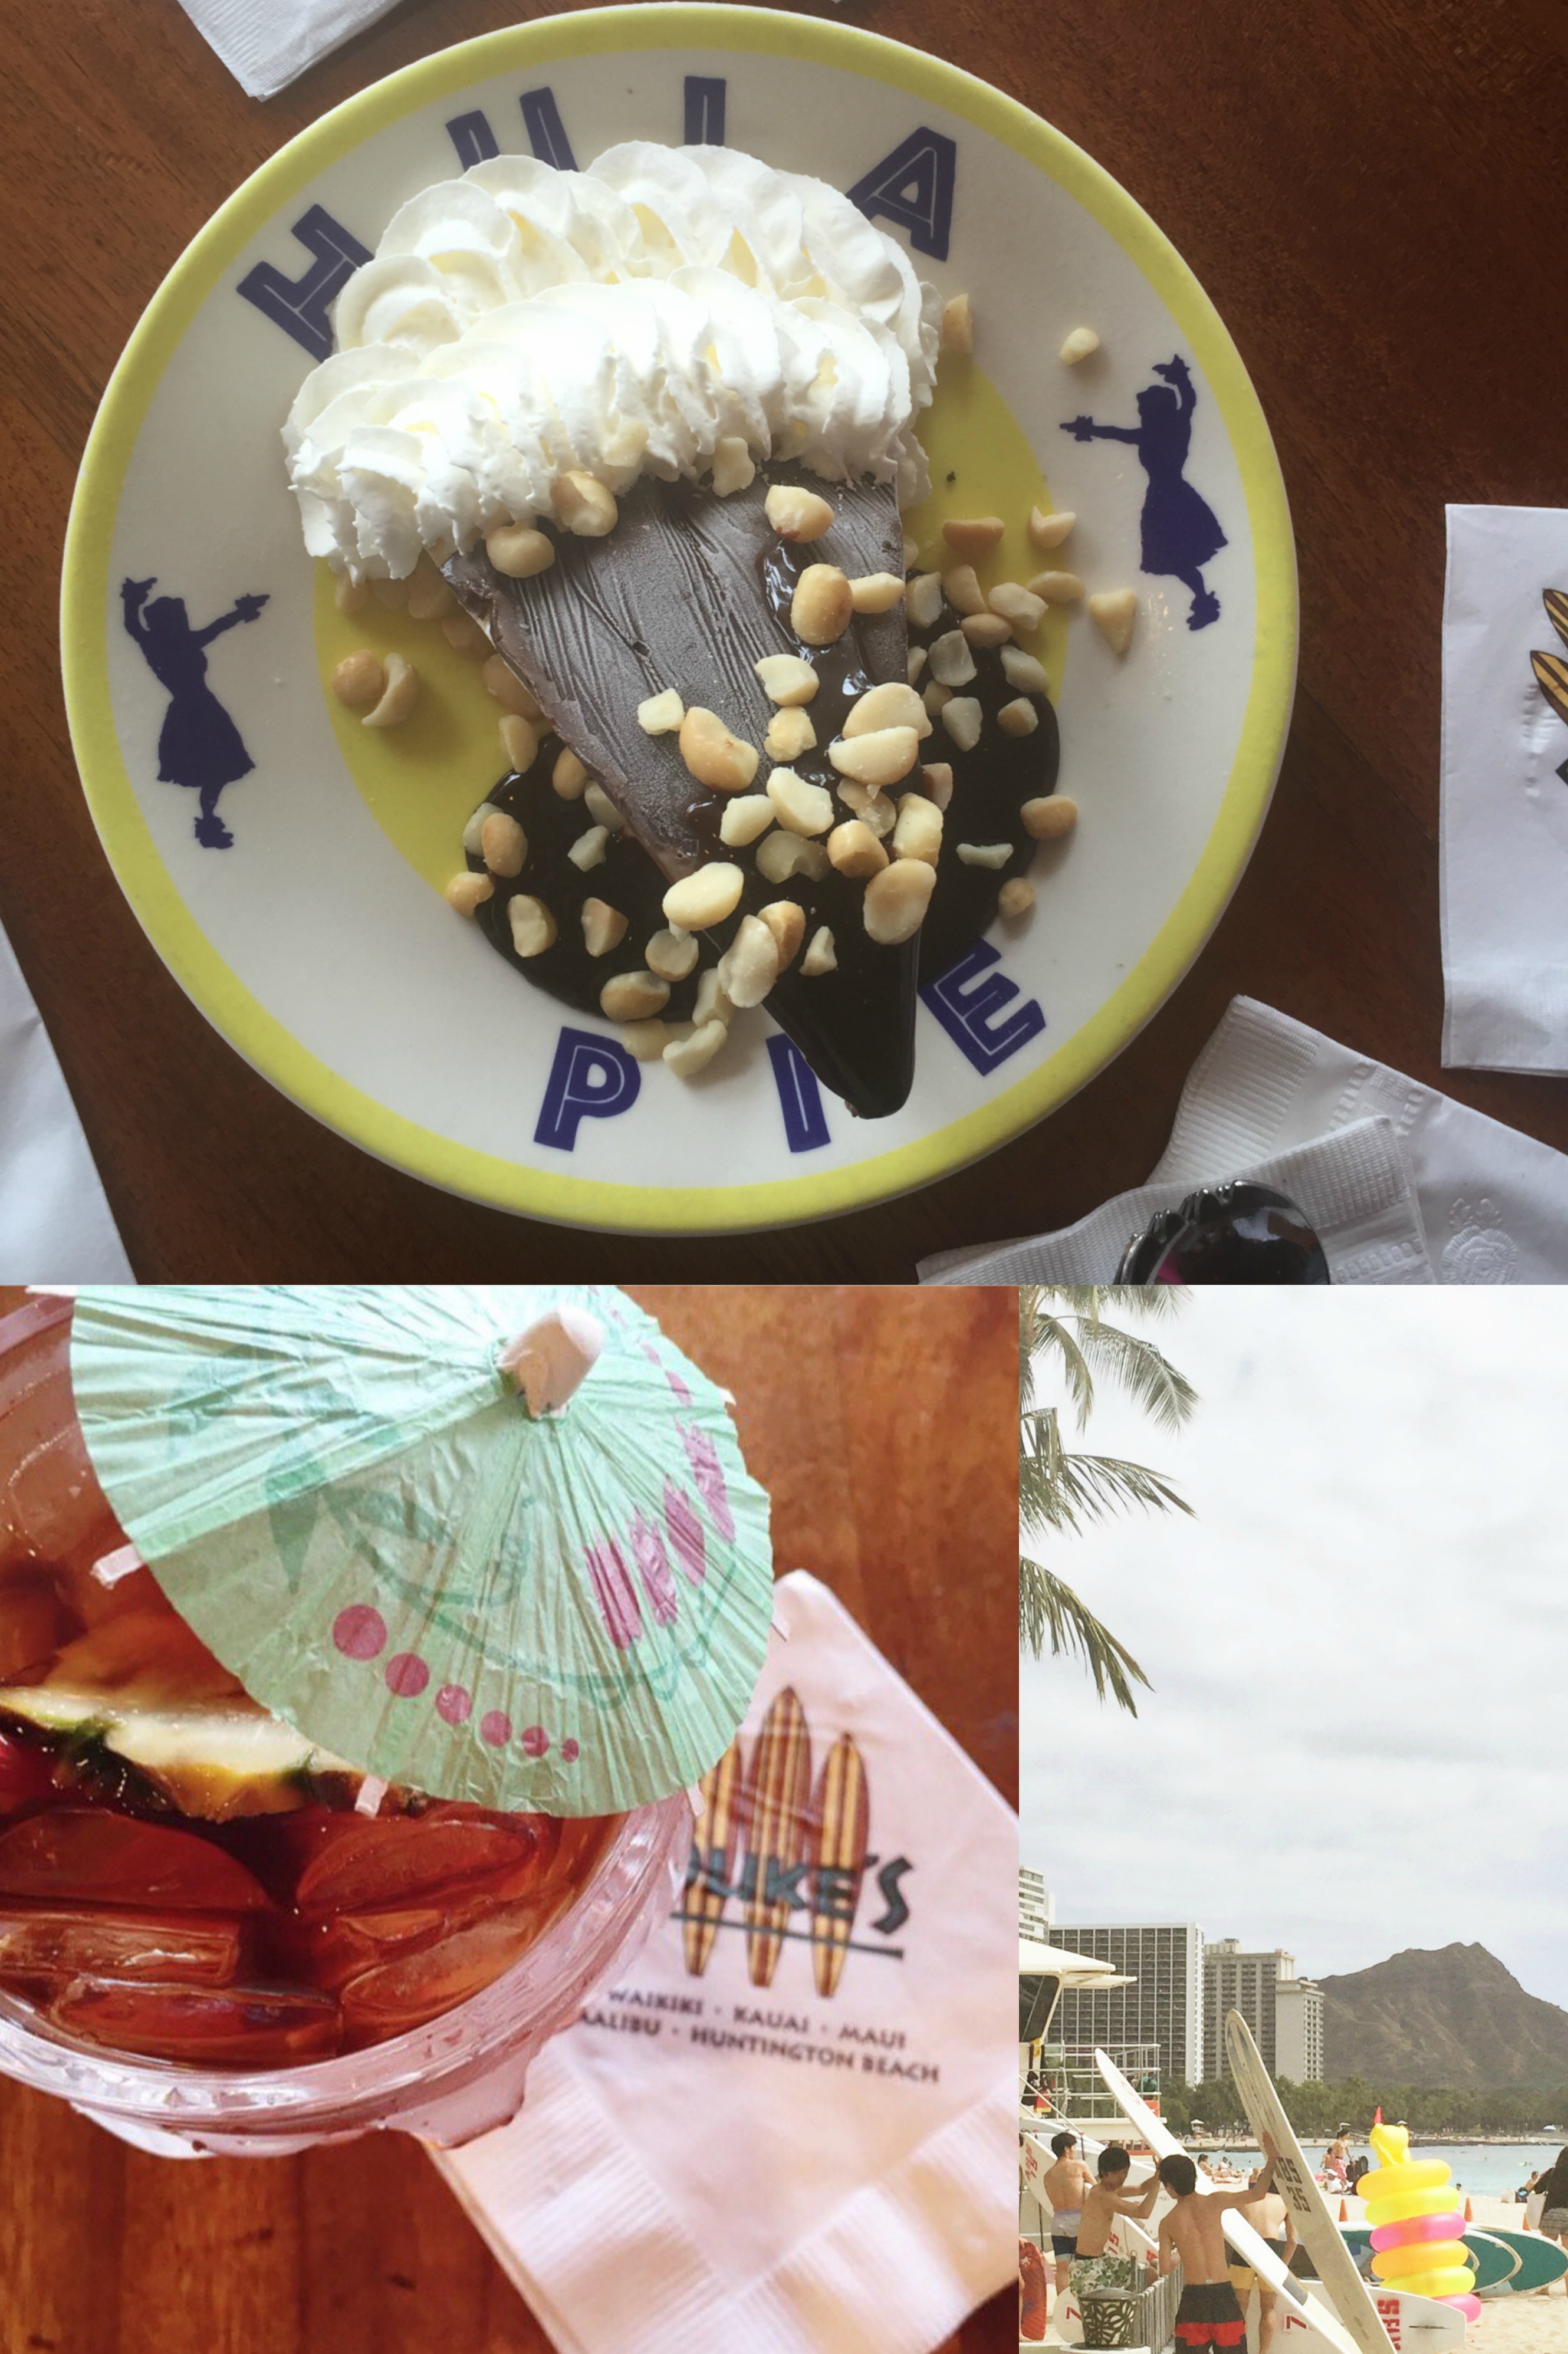 Duke's Waikiki - The Instagram Guide To Honolulu - Instagram Worthy Spots Honolulu - Oahu Guide For Instagram - Best Places To Take Photos Honolulu - Oahu Vacation Guide - Where To Visit Hawaii - Hawaii Itinerary - Communikait by Kait Hanson